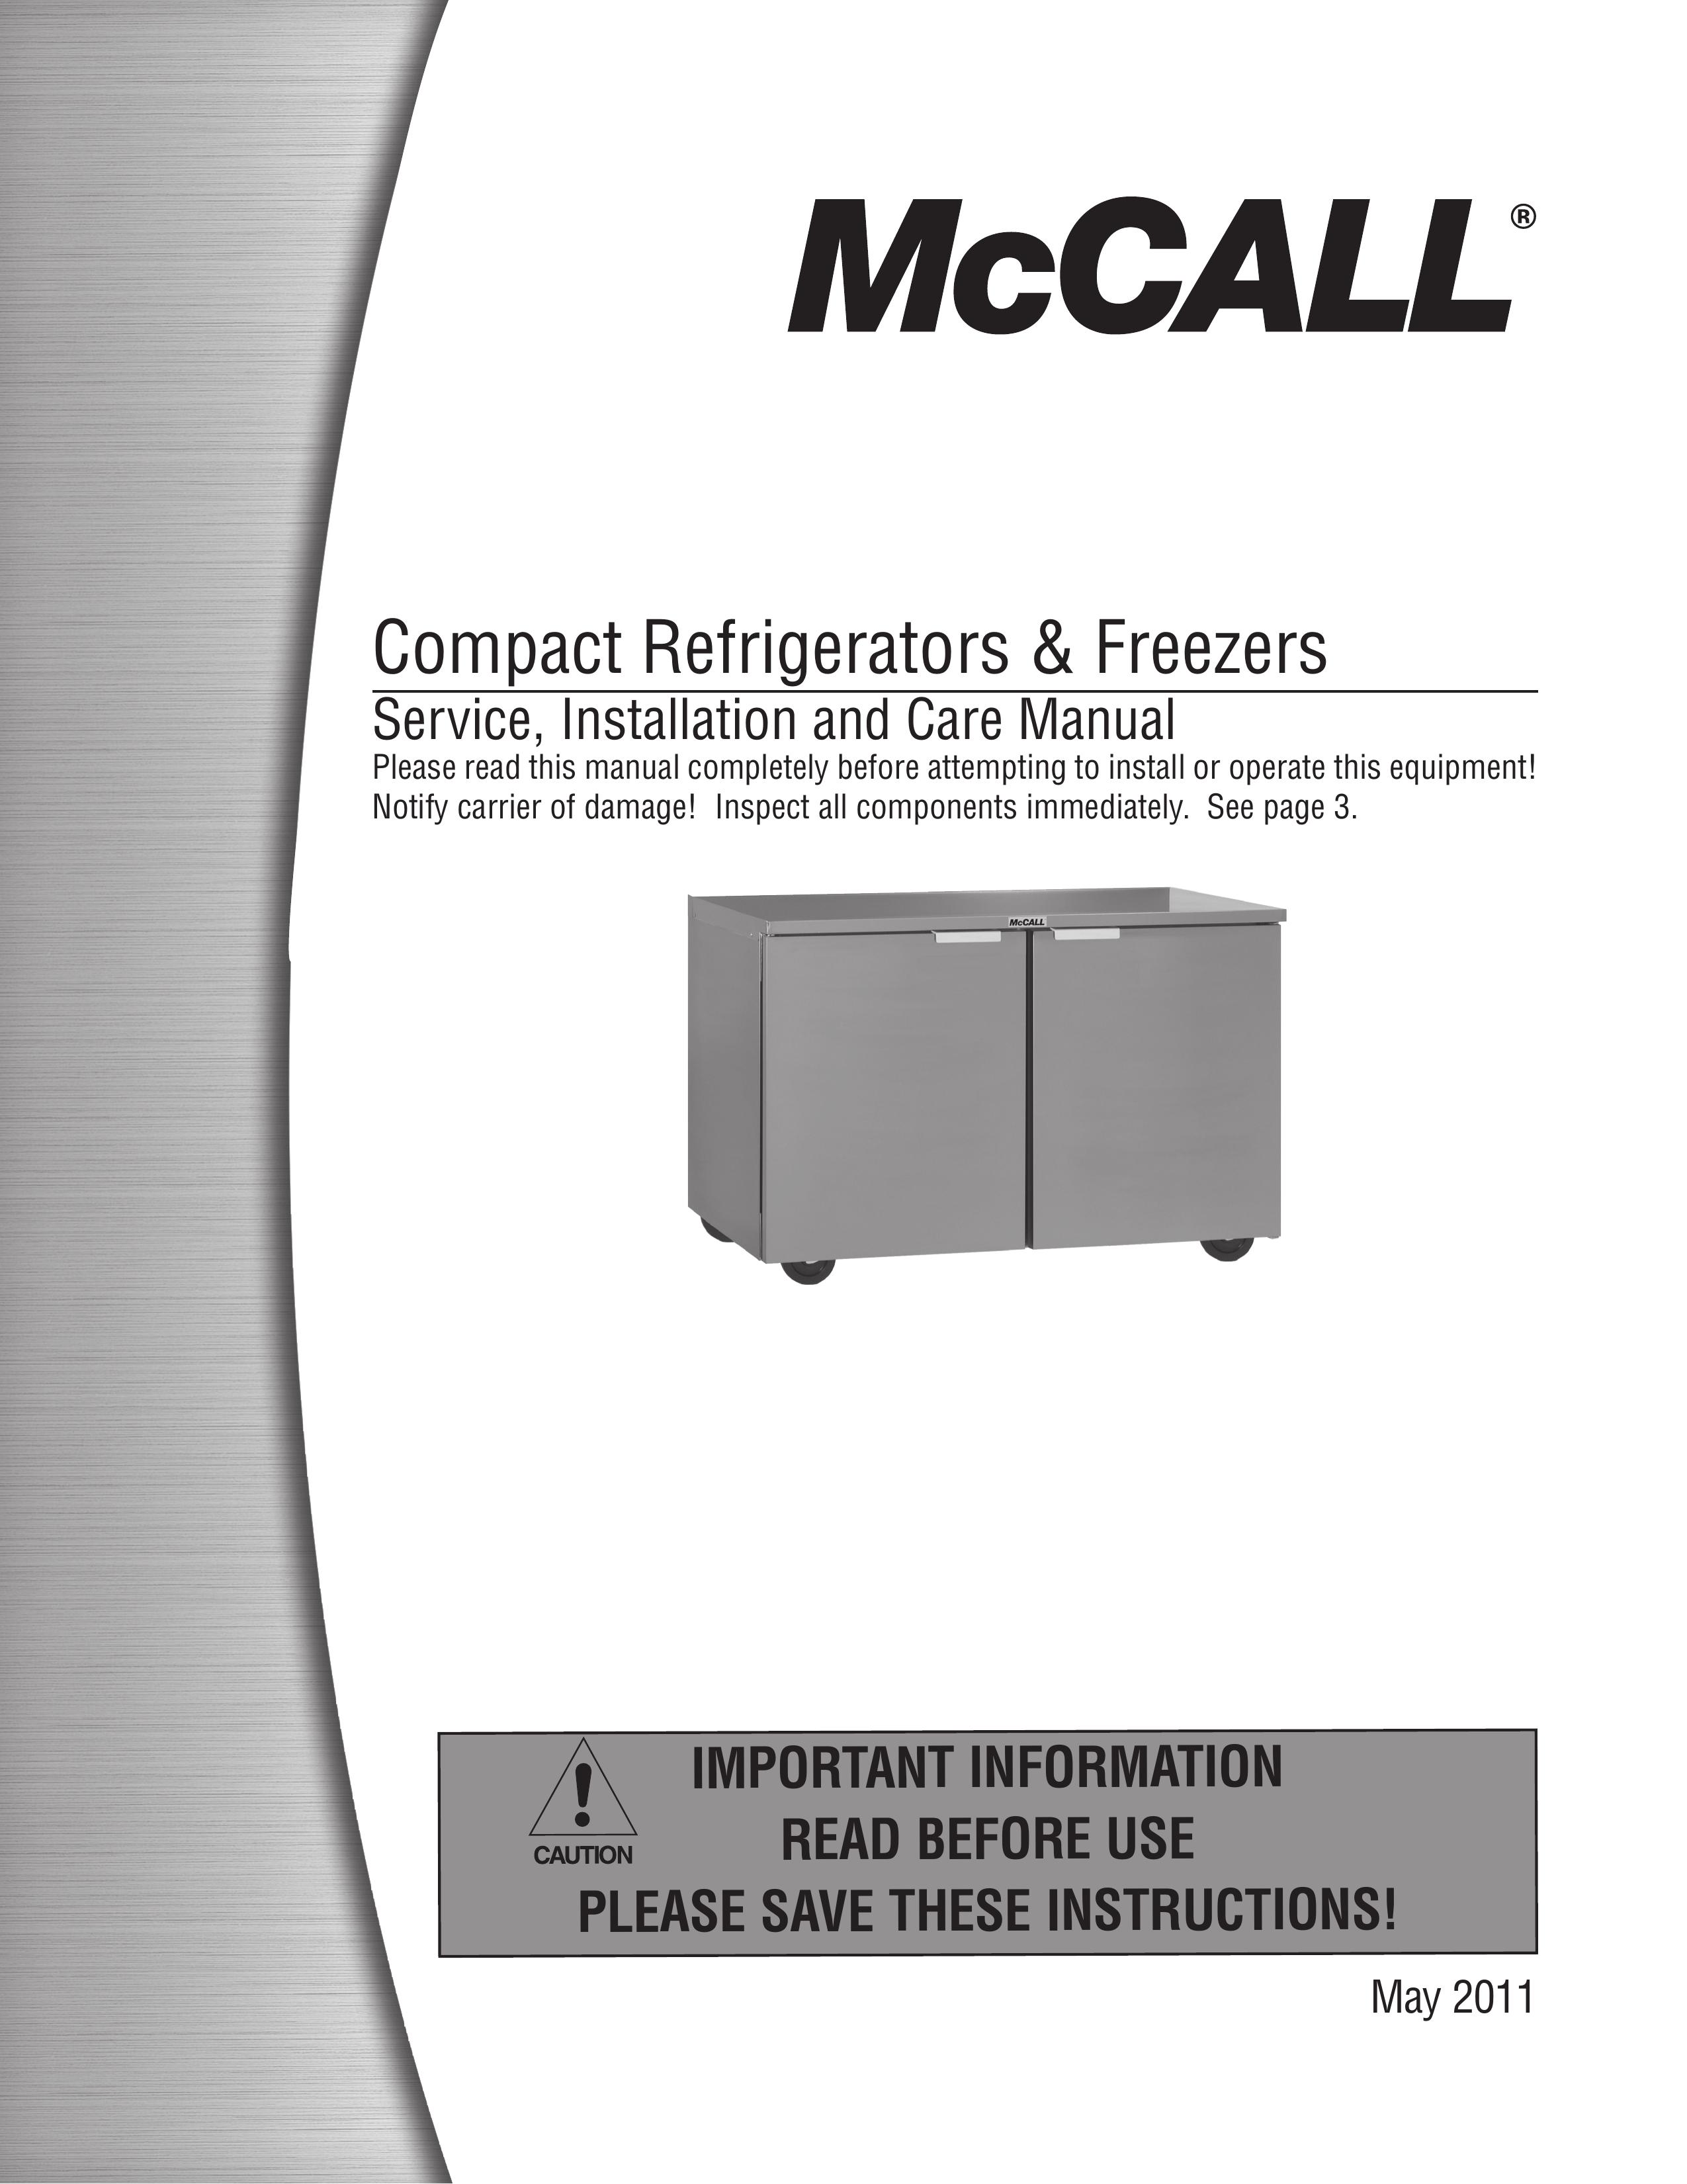 McCall Refrigeration MCCF27 Refrigerator User Manual